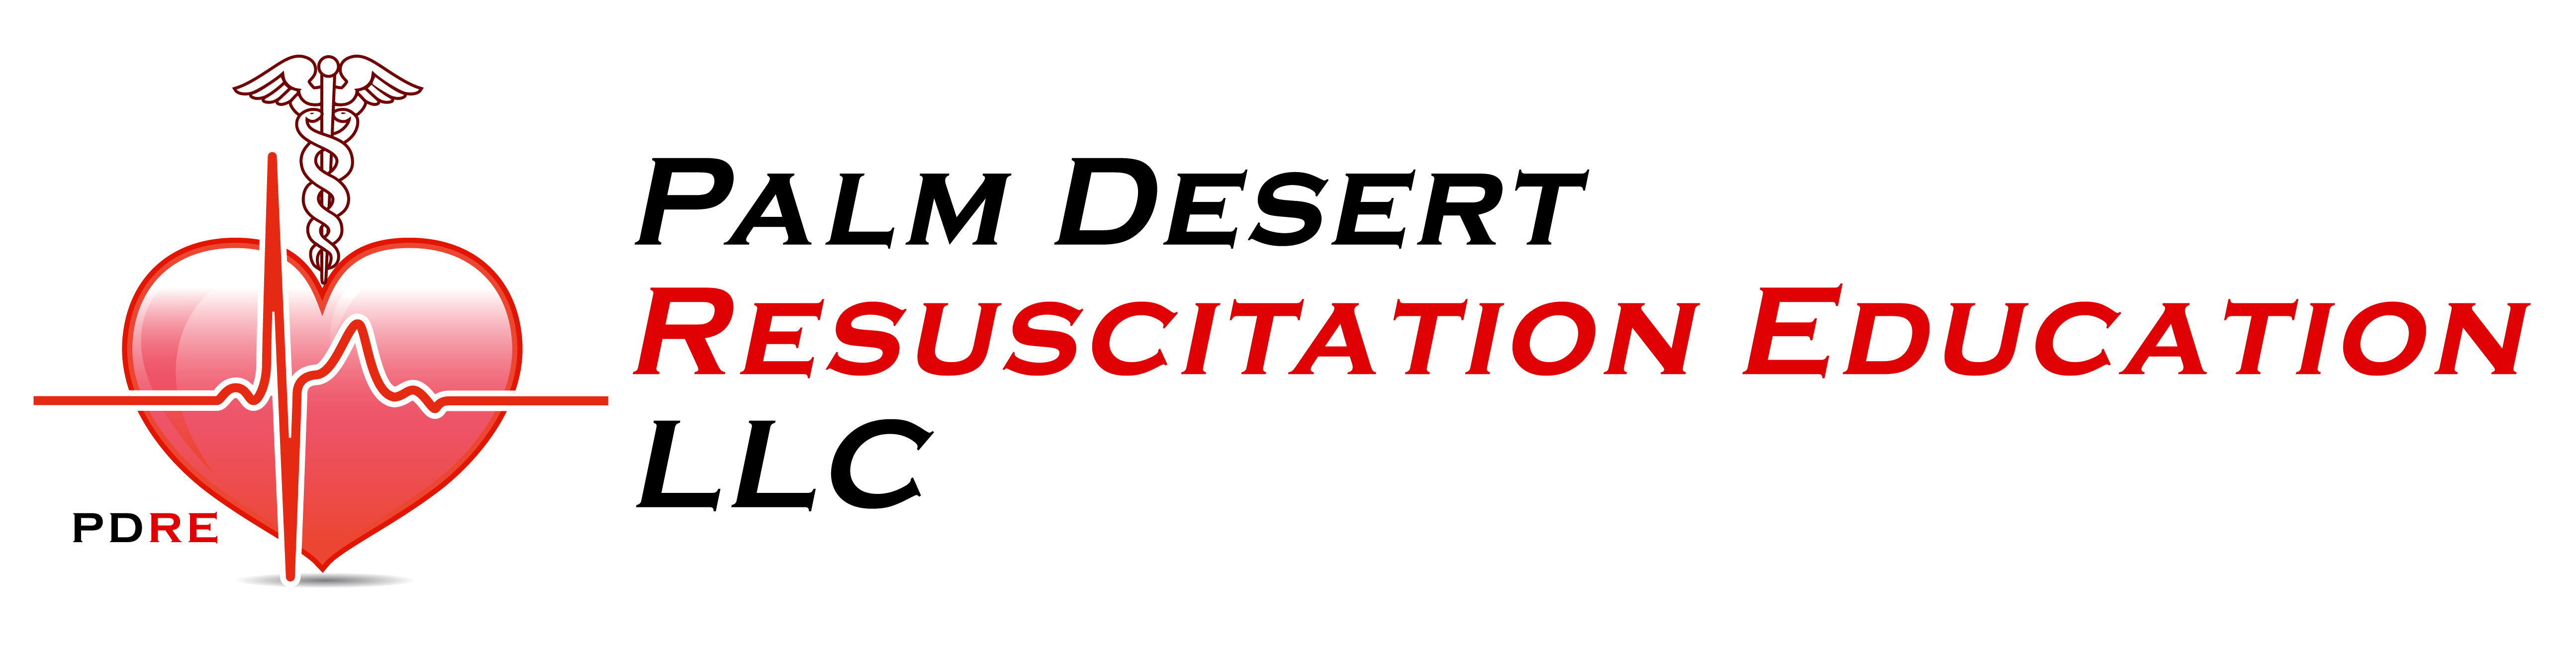 Palm Desert Resuscitation Education LLC (PDRE)